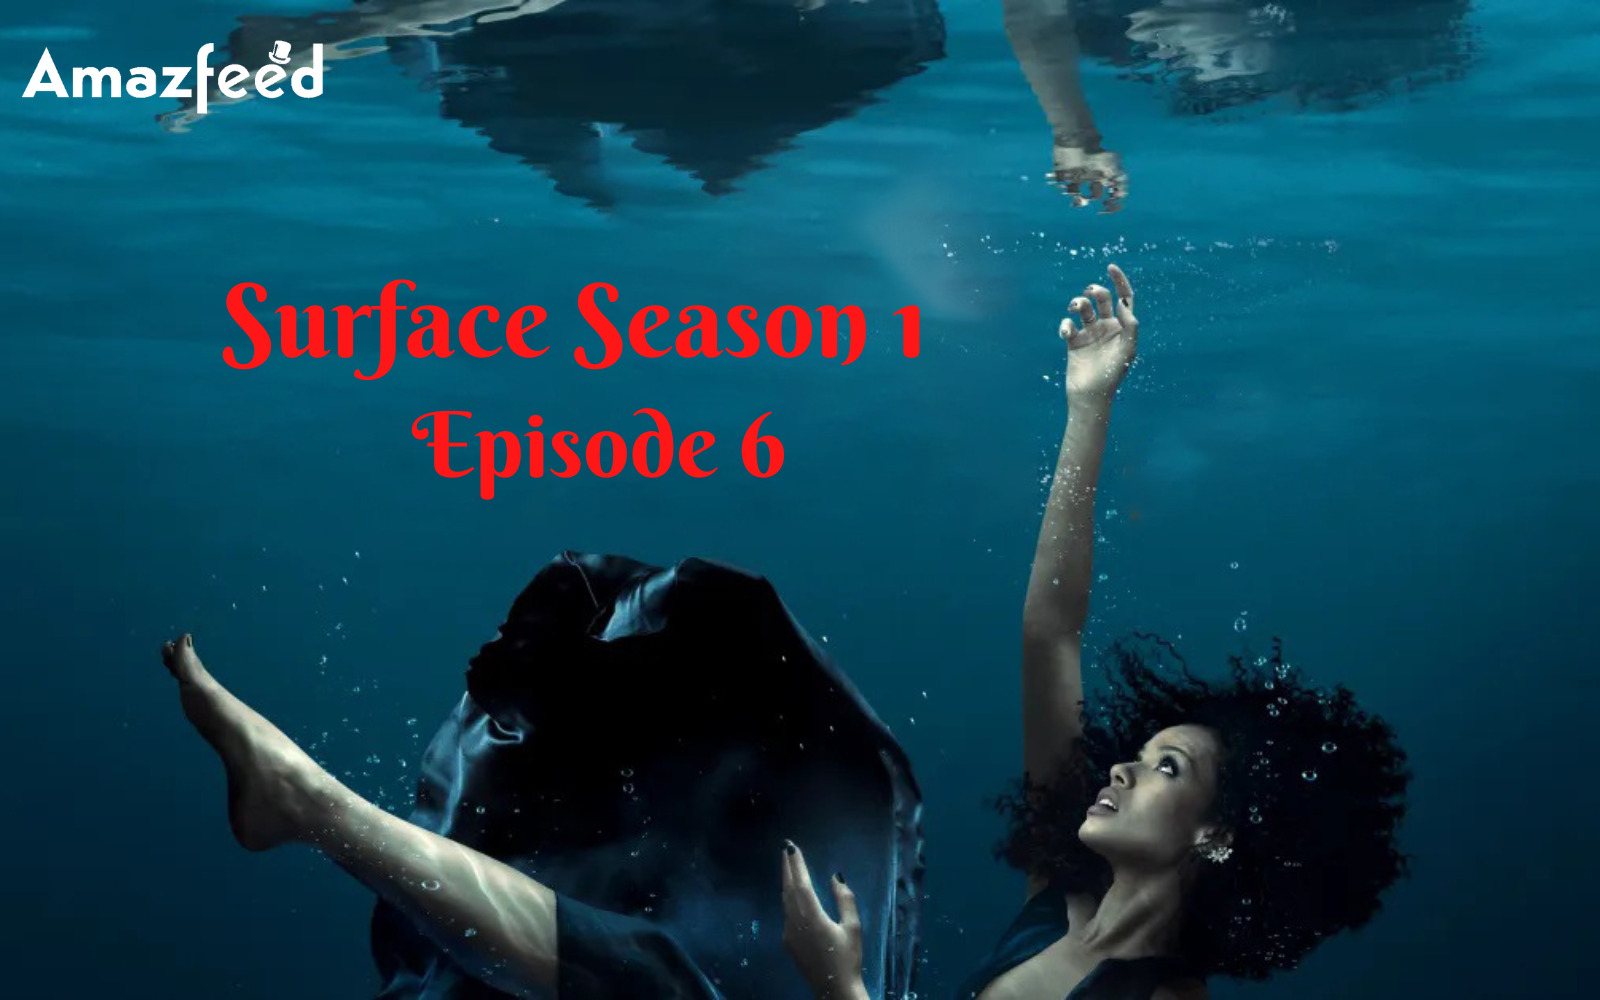 Surface Season 1 episode 6 release date